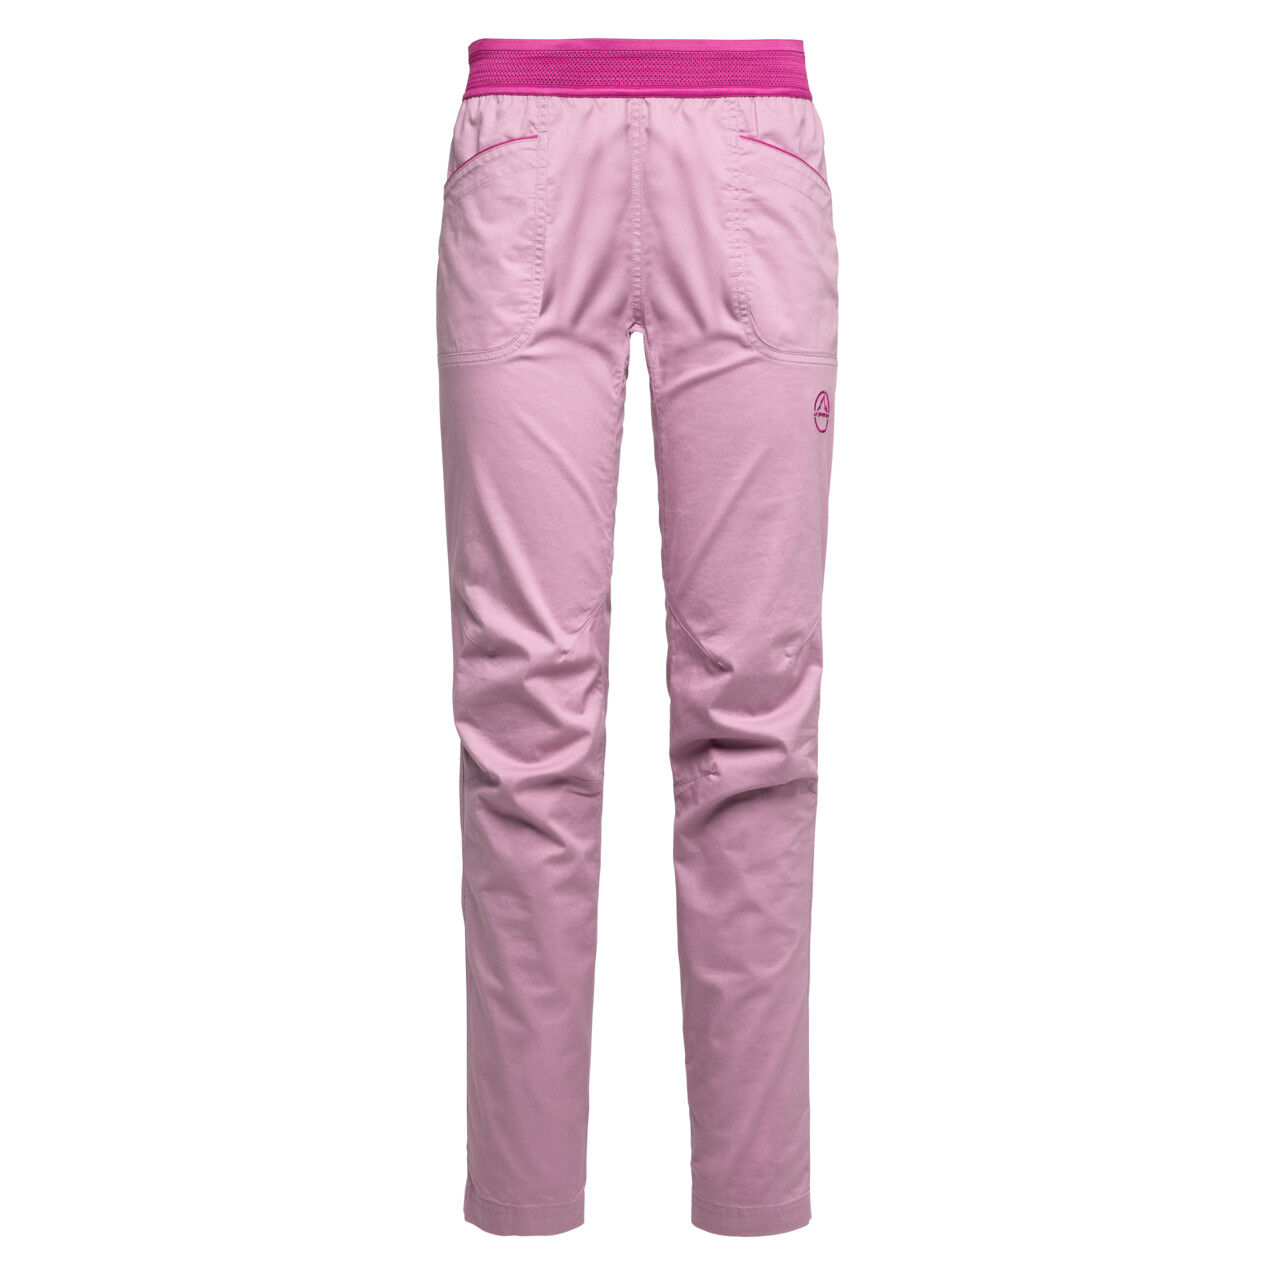 La Sportiva Itaca Pant - Climbing trousers - Women's